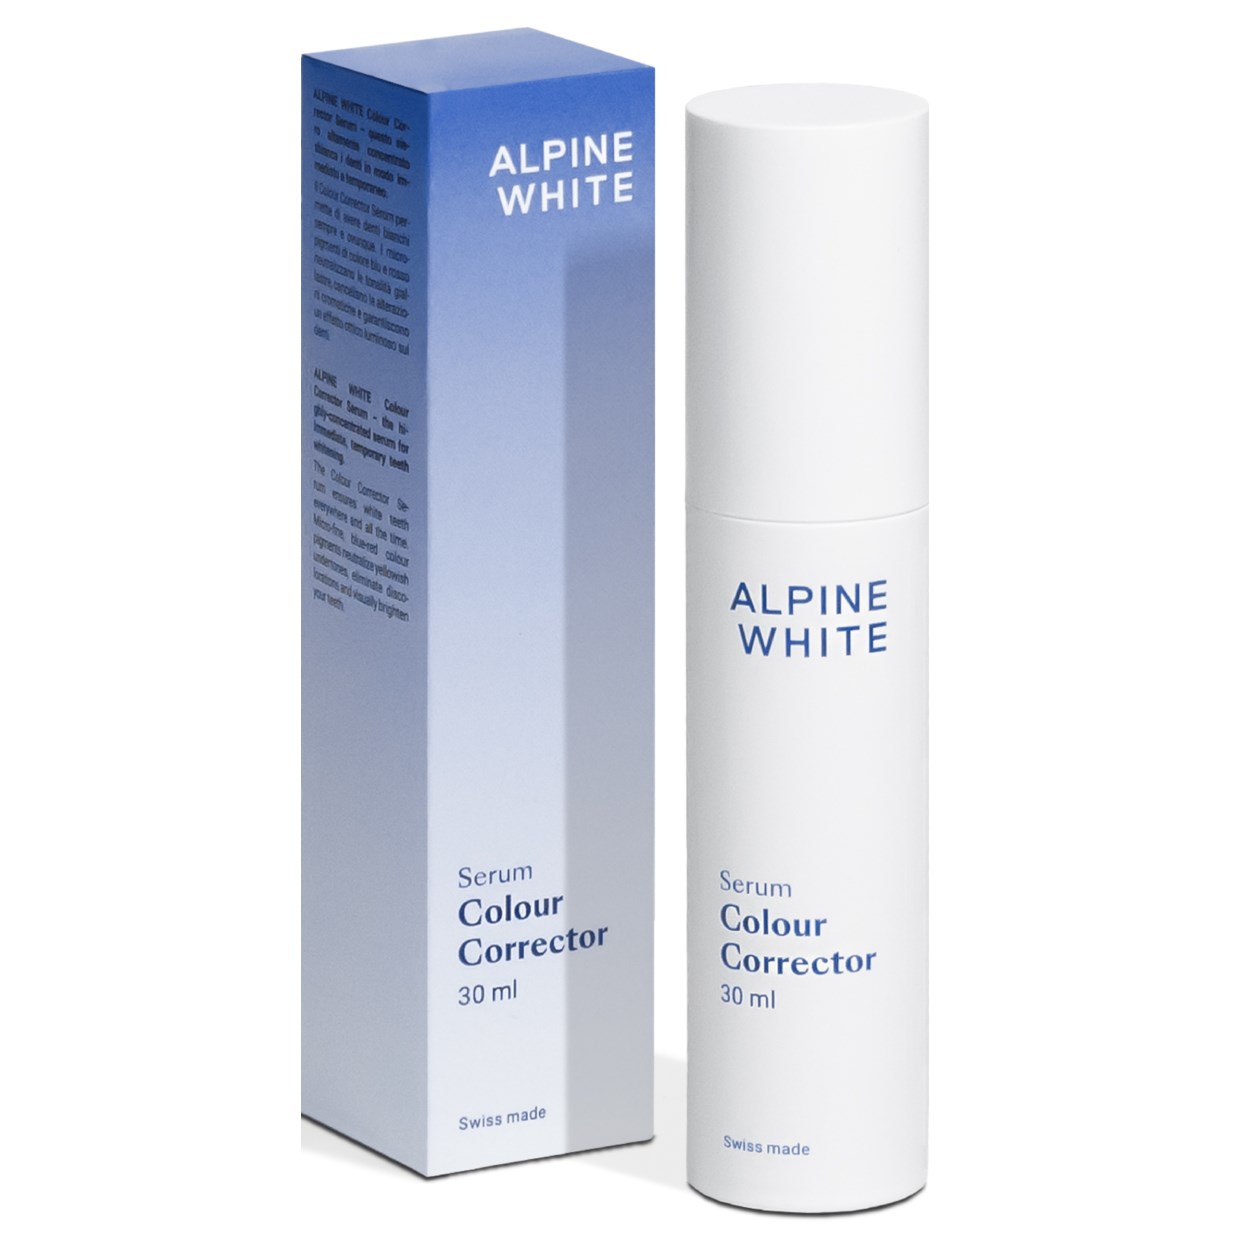 ALPINE WHITE Colour Corrector Serum 30 ml